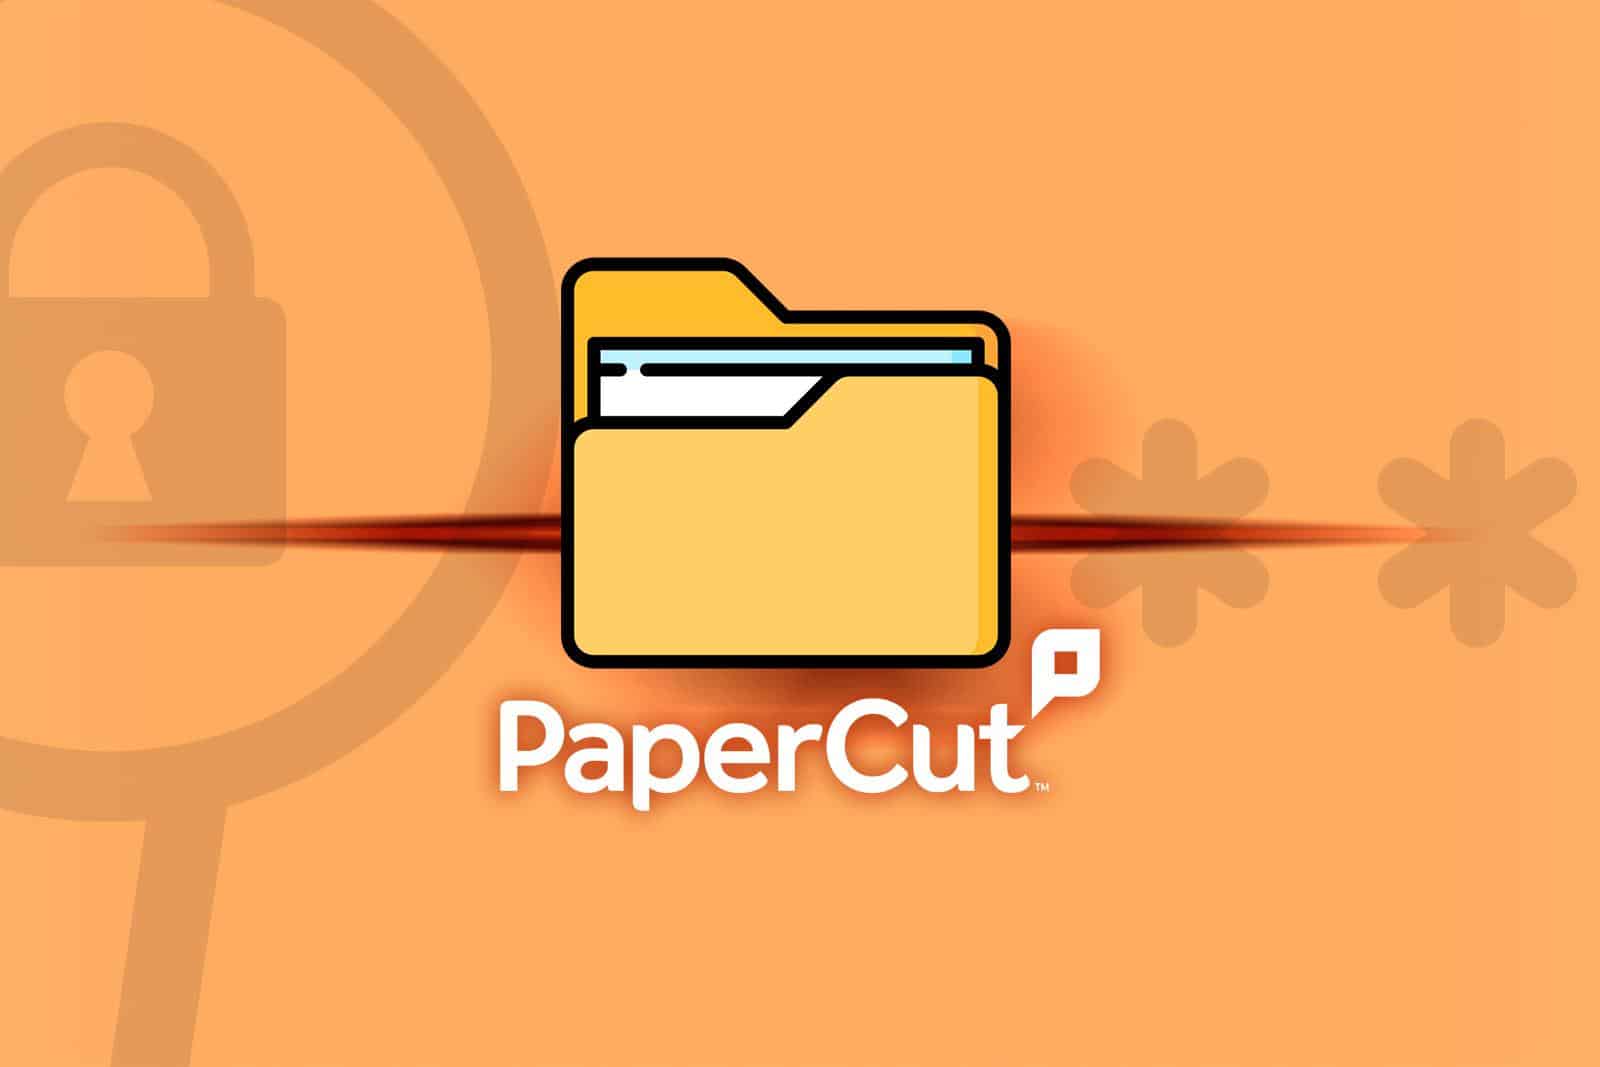 PaperCut vulnerabilities leveraged by Clop, LockBit ransomware affiliates